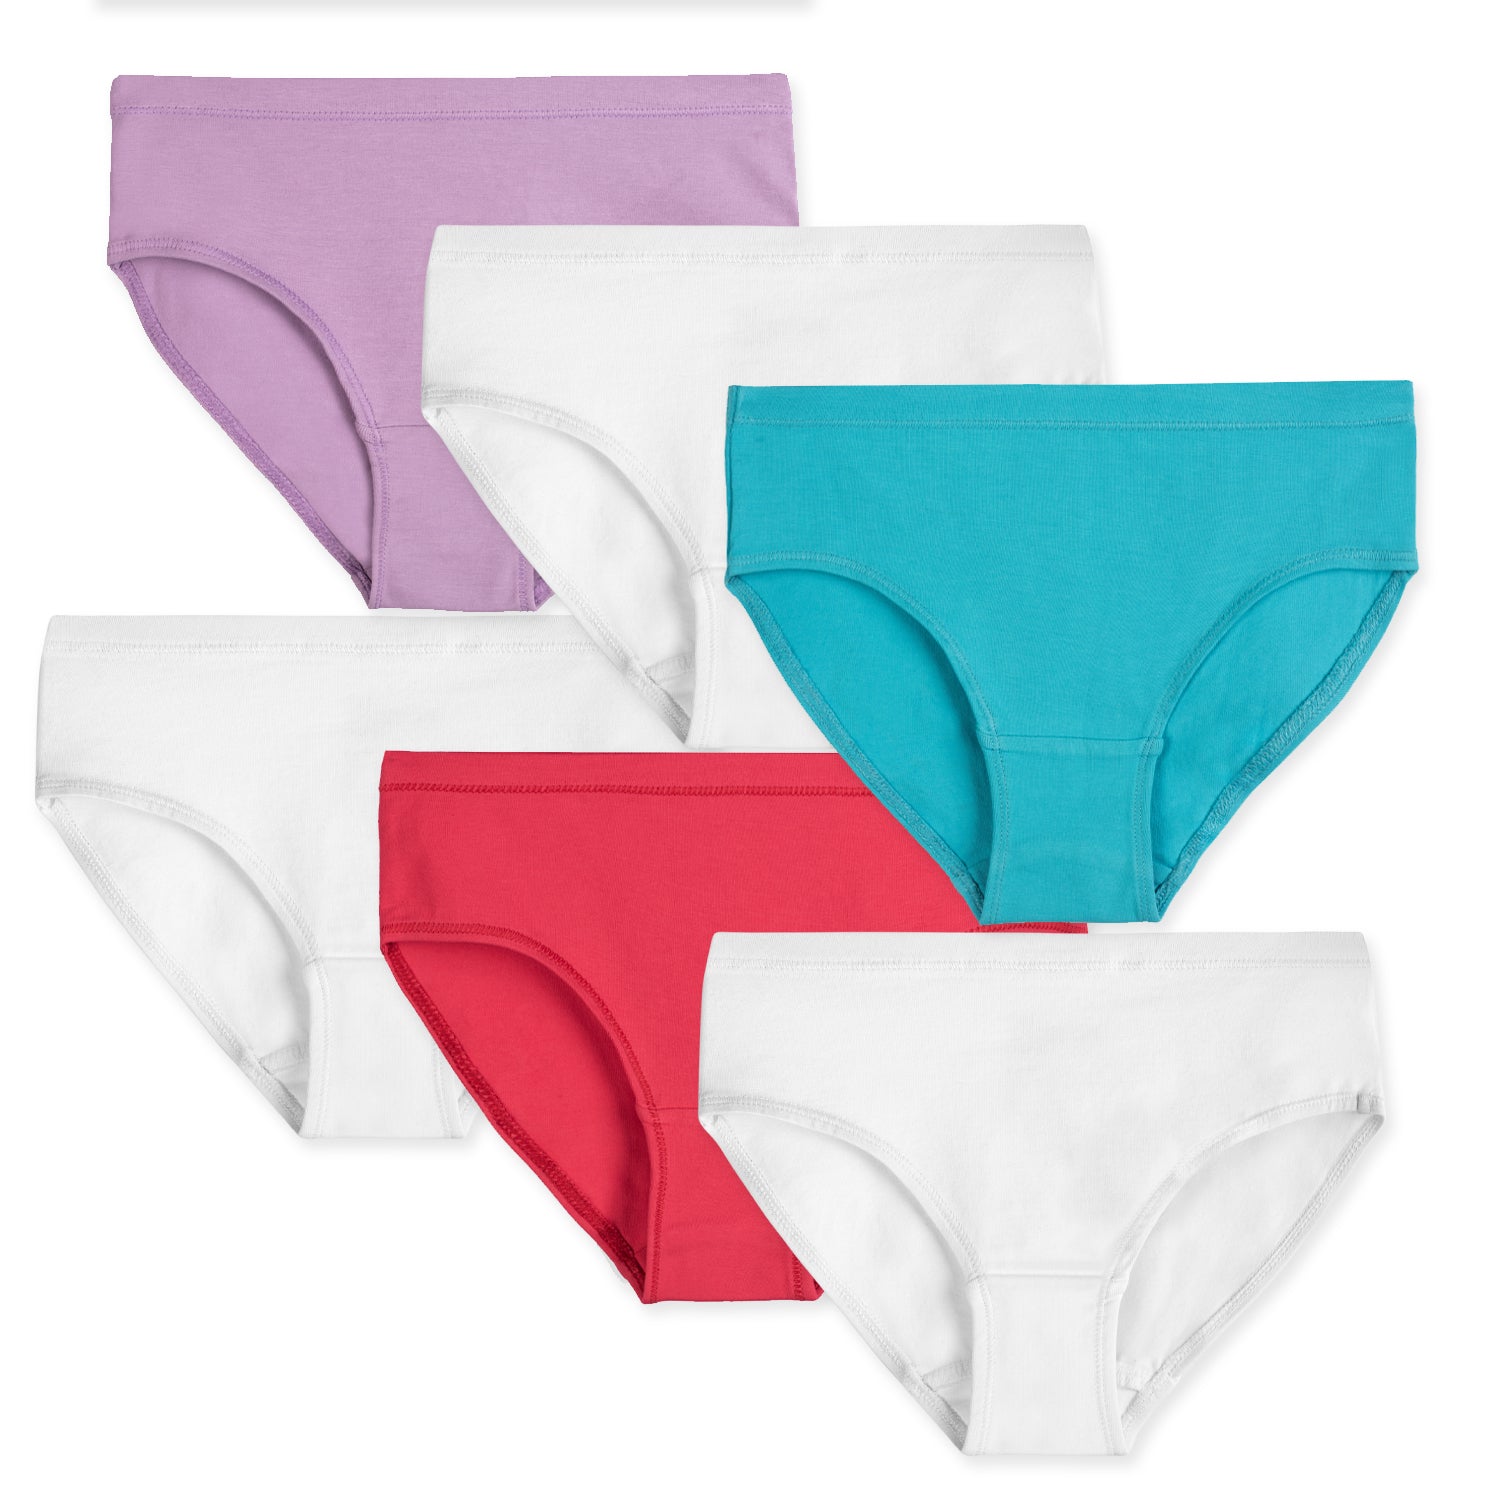 Buy Fashiol Women/Girls Zipper Pocket Panty ( Pack of 3 Multicolor